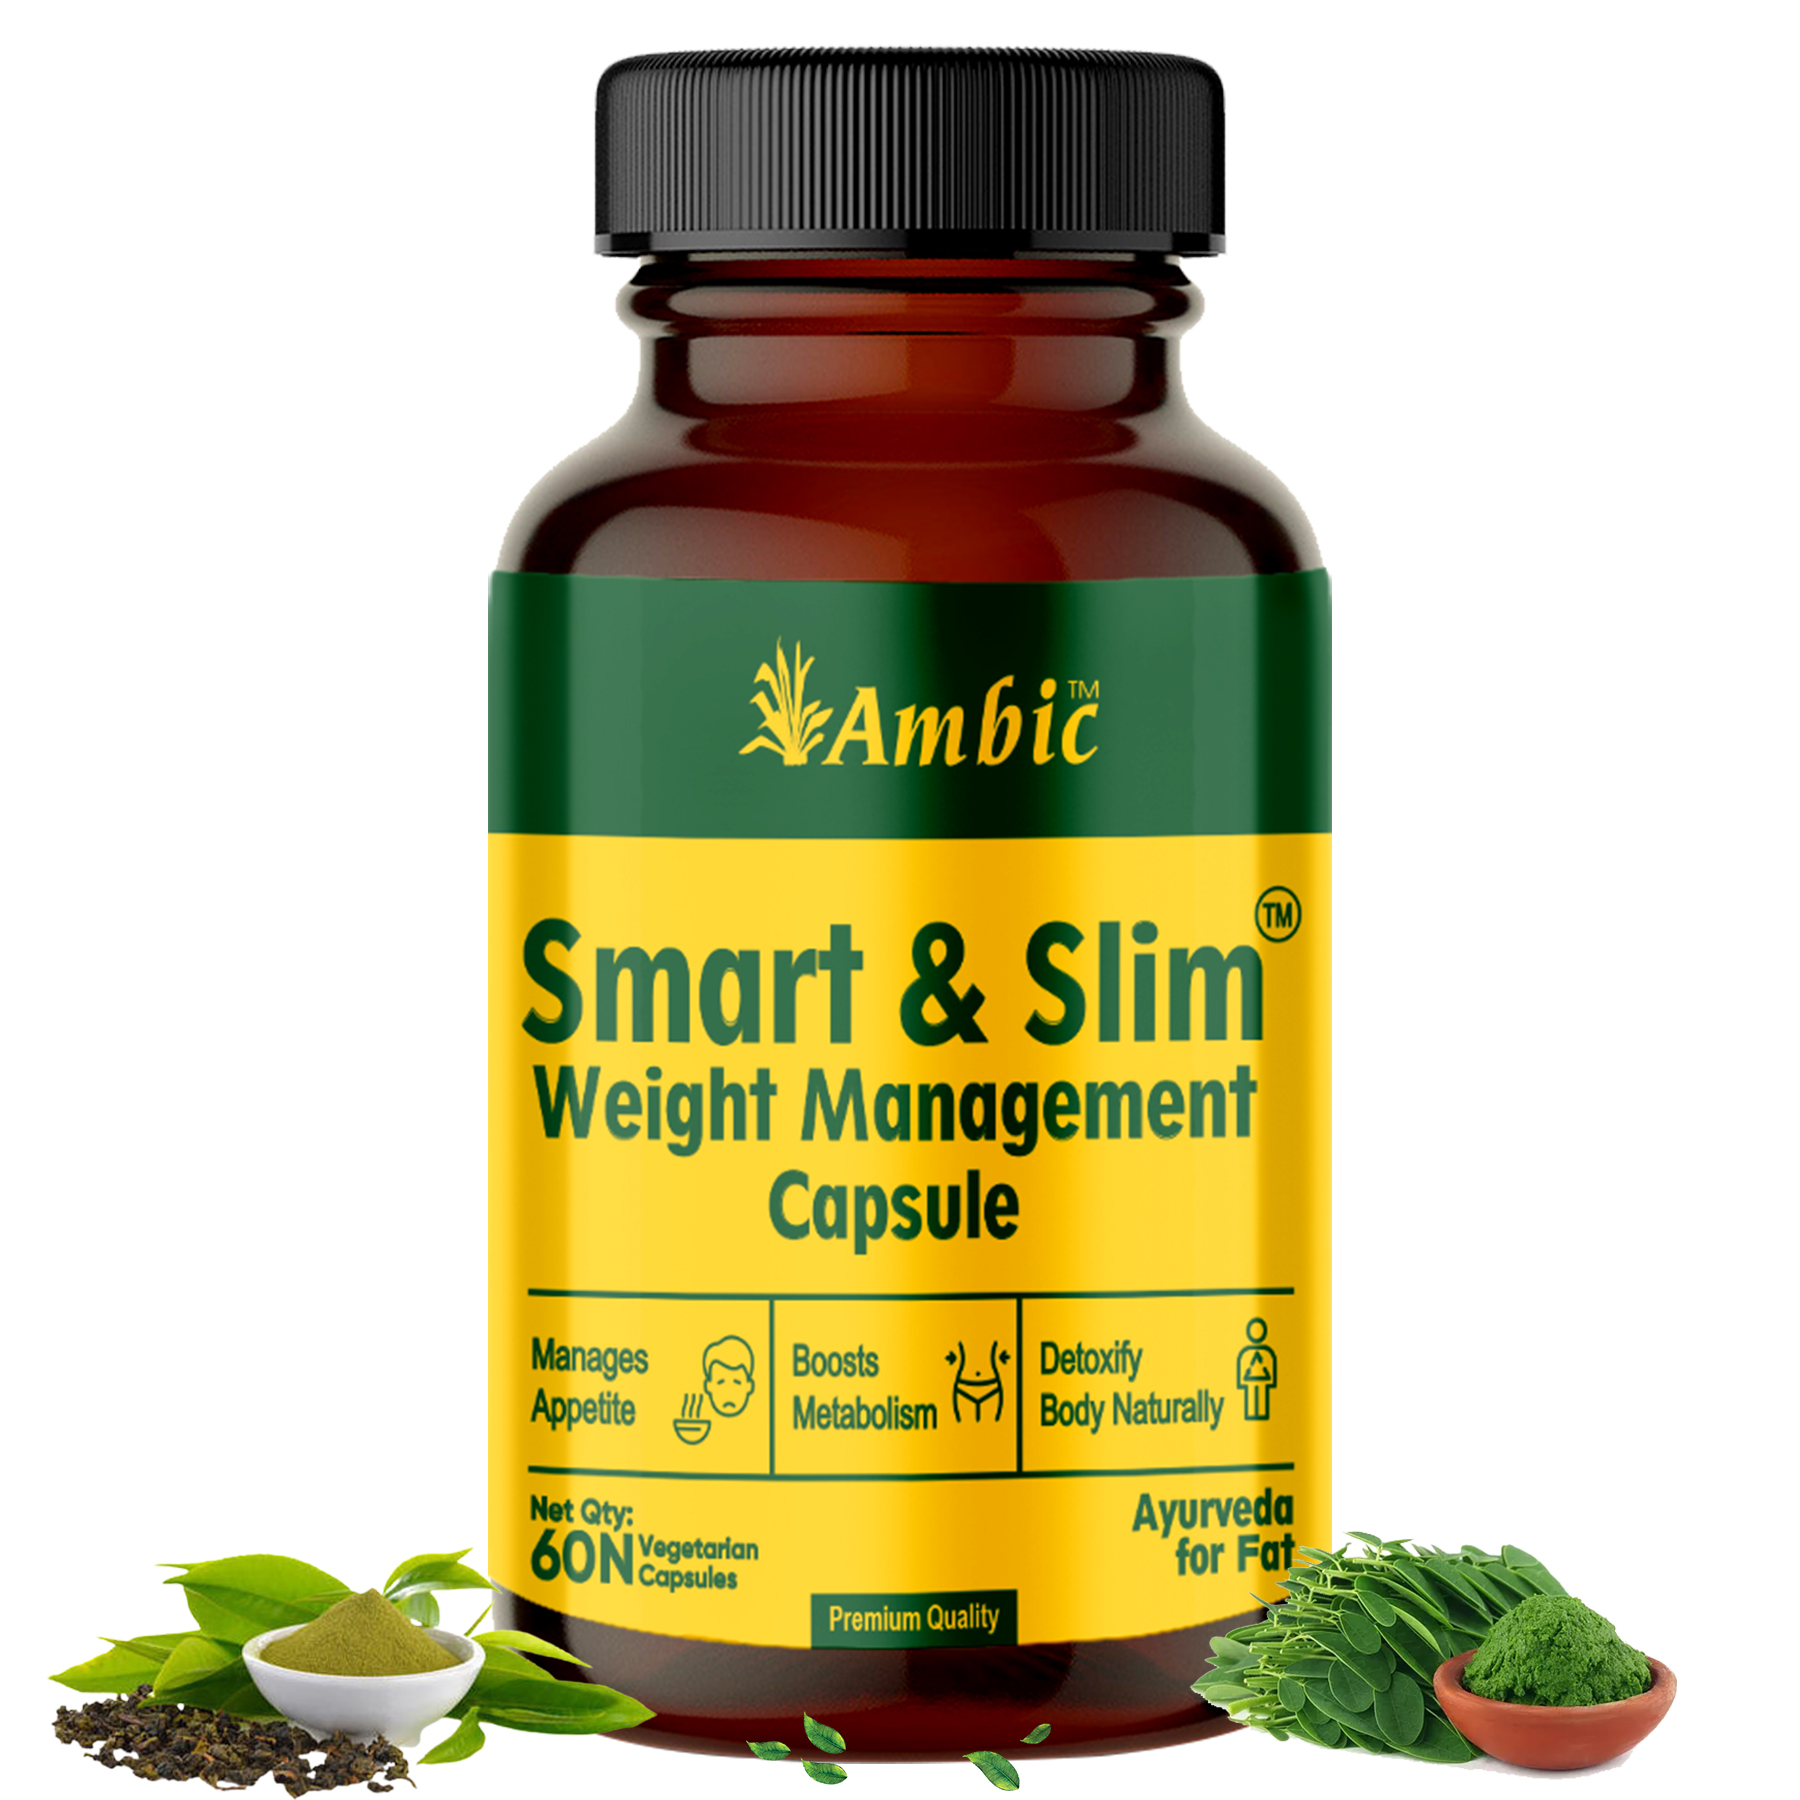 Smart & Slim Weight Management Capsule